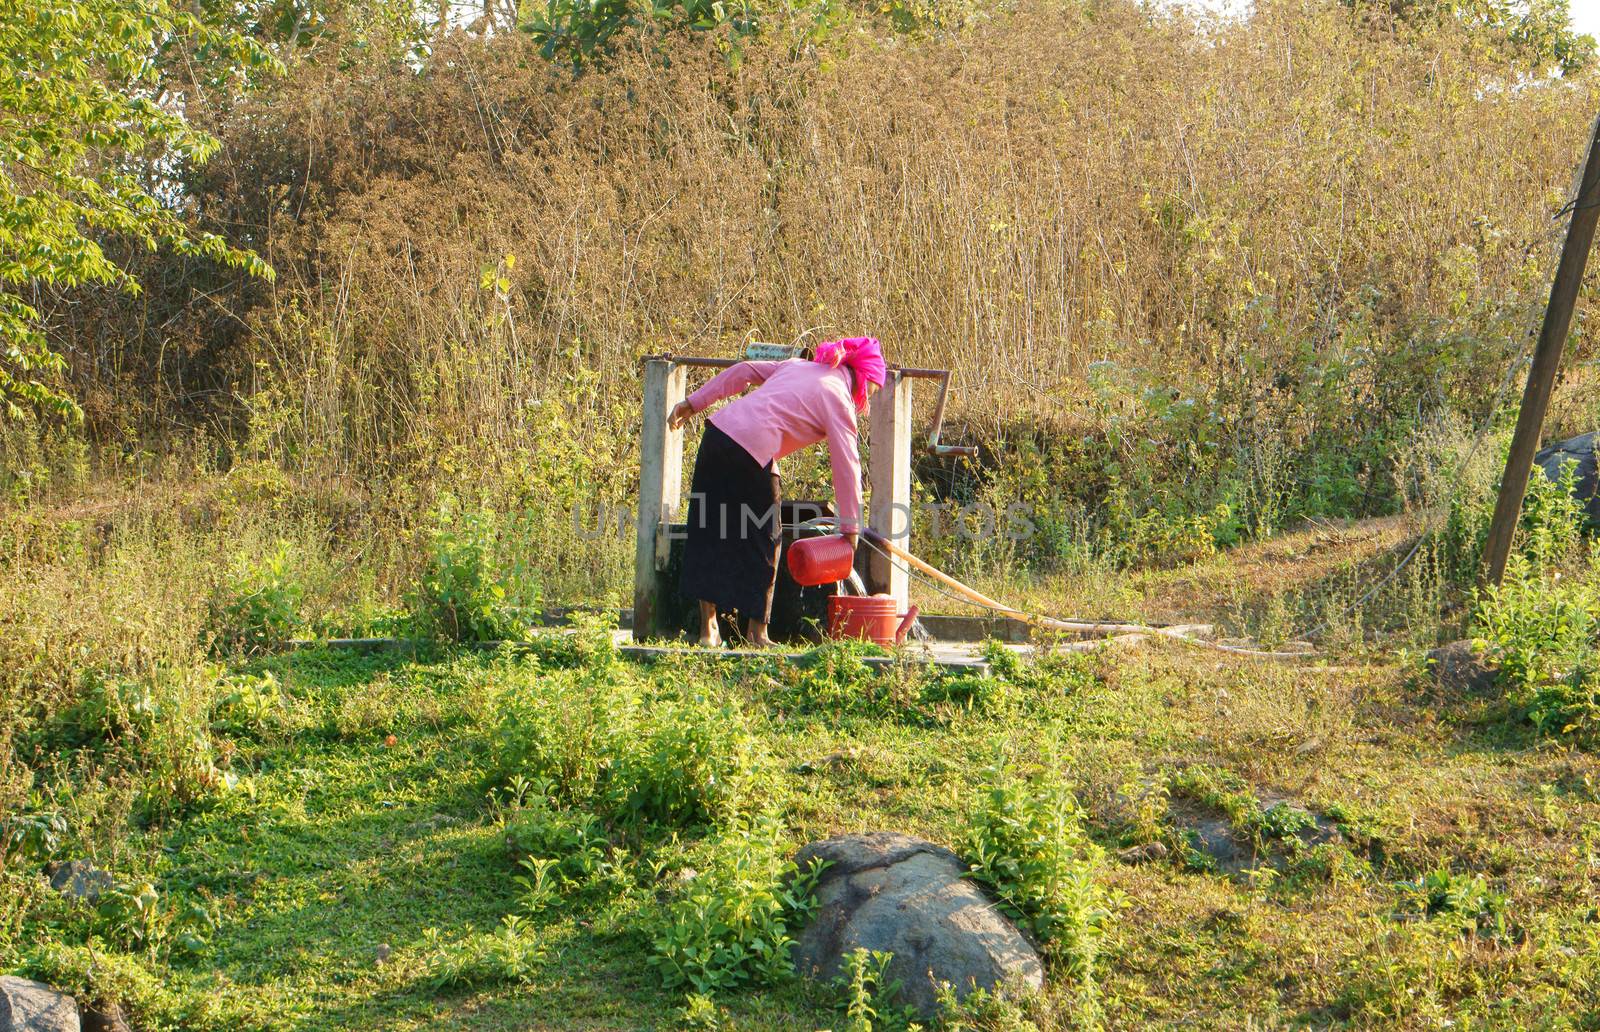  DAKLAK, VIETNAM- FEB 6: People  scoop water from water well by bucker, woman wear colorful clothing, the well at meadow in Vietnamese countryside, Viet Nam, Feb 6, 2014  